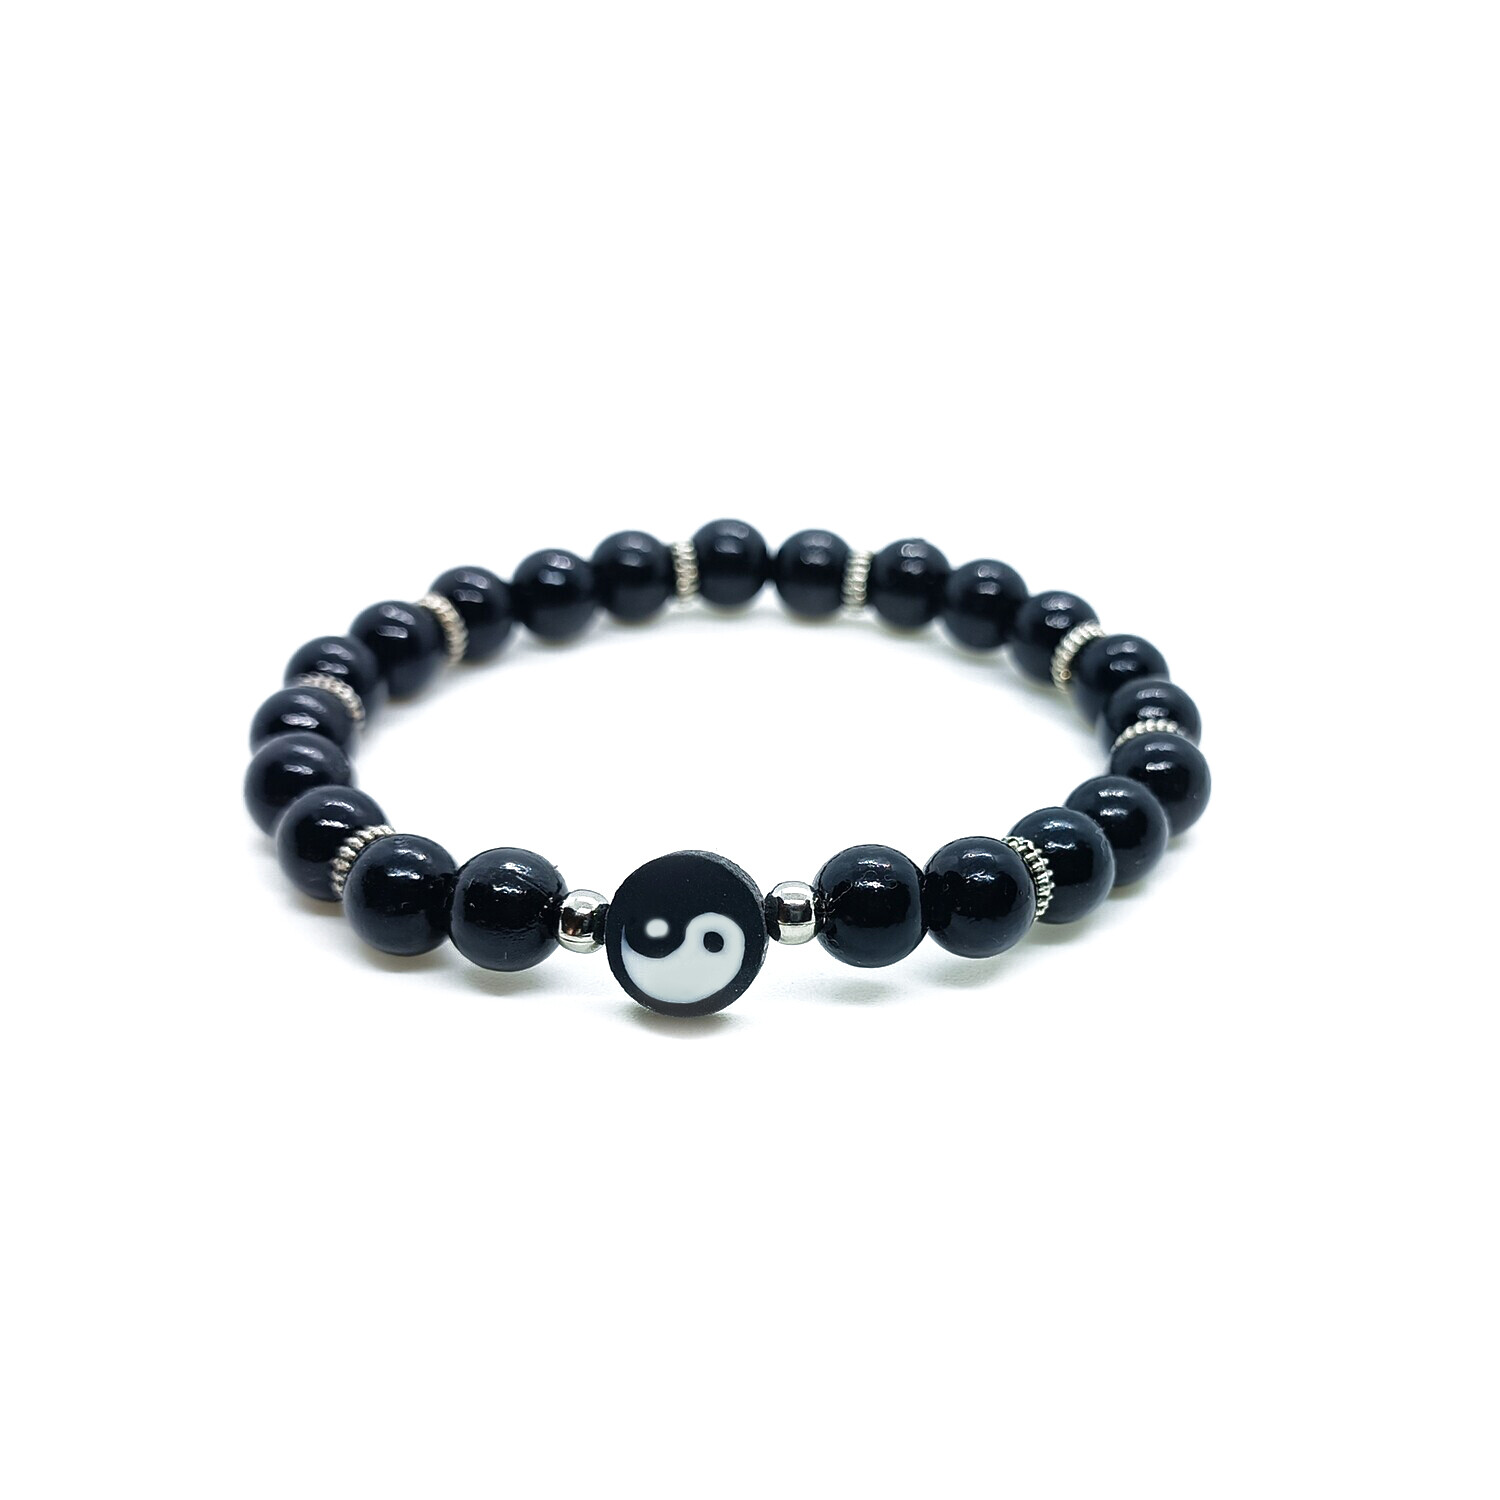 Yin yang bracelet